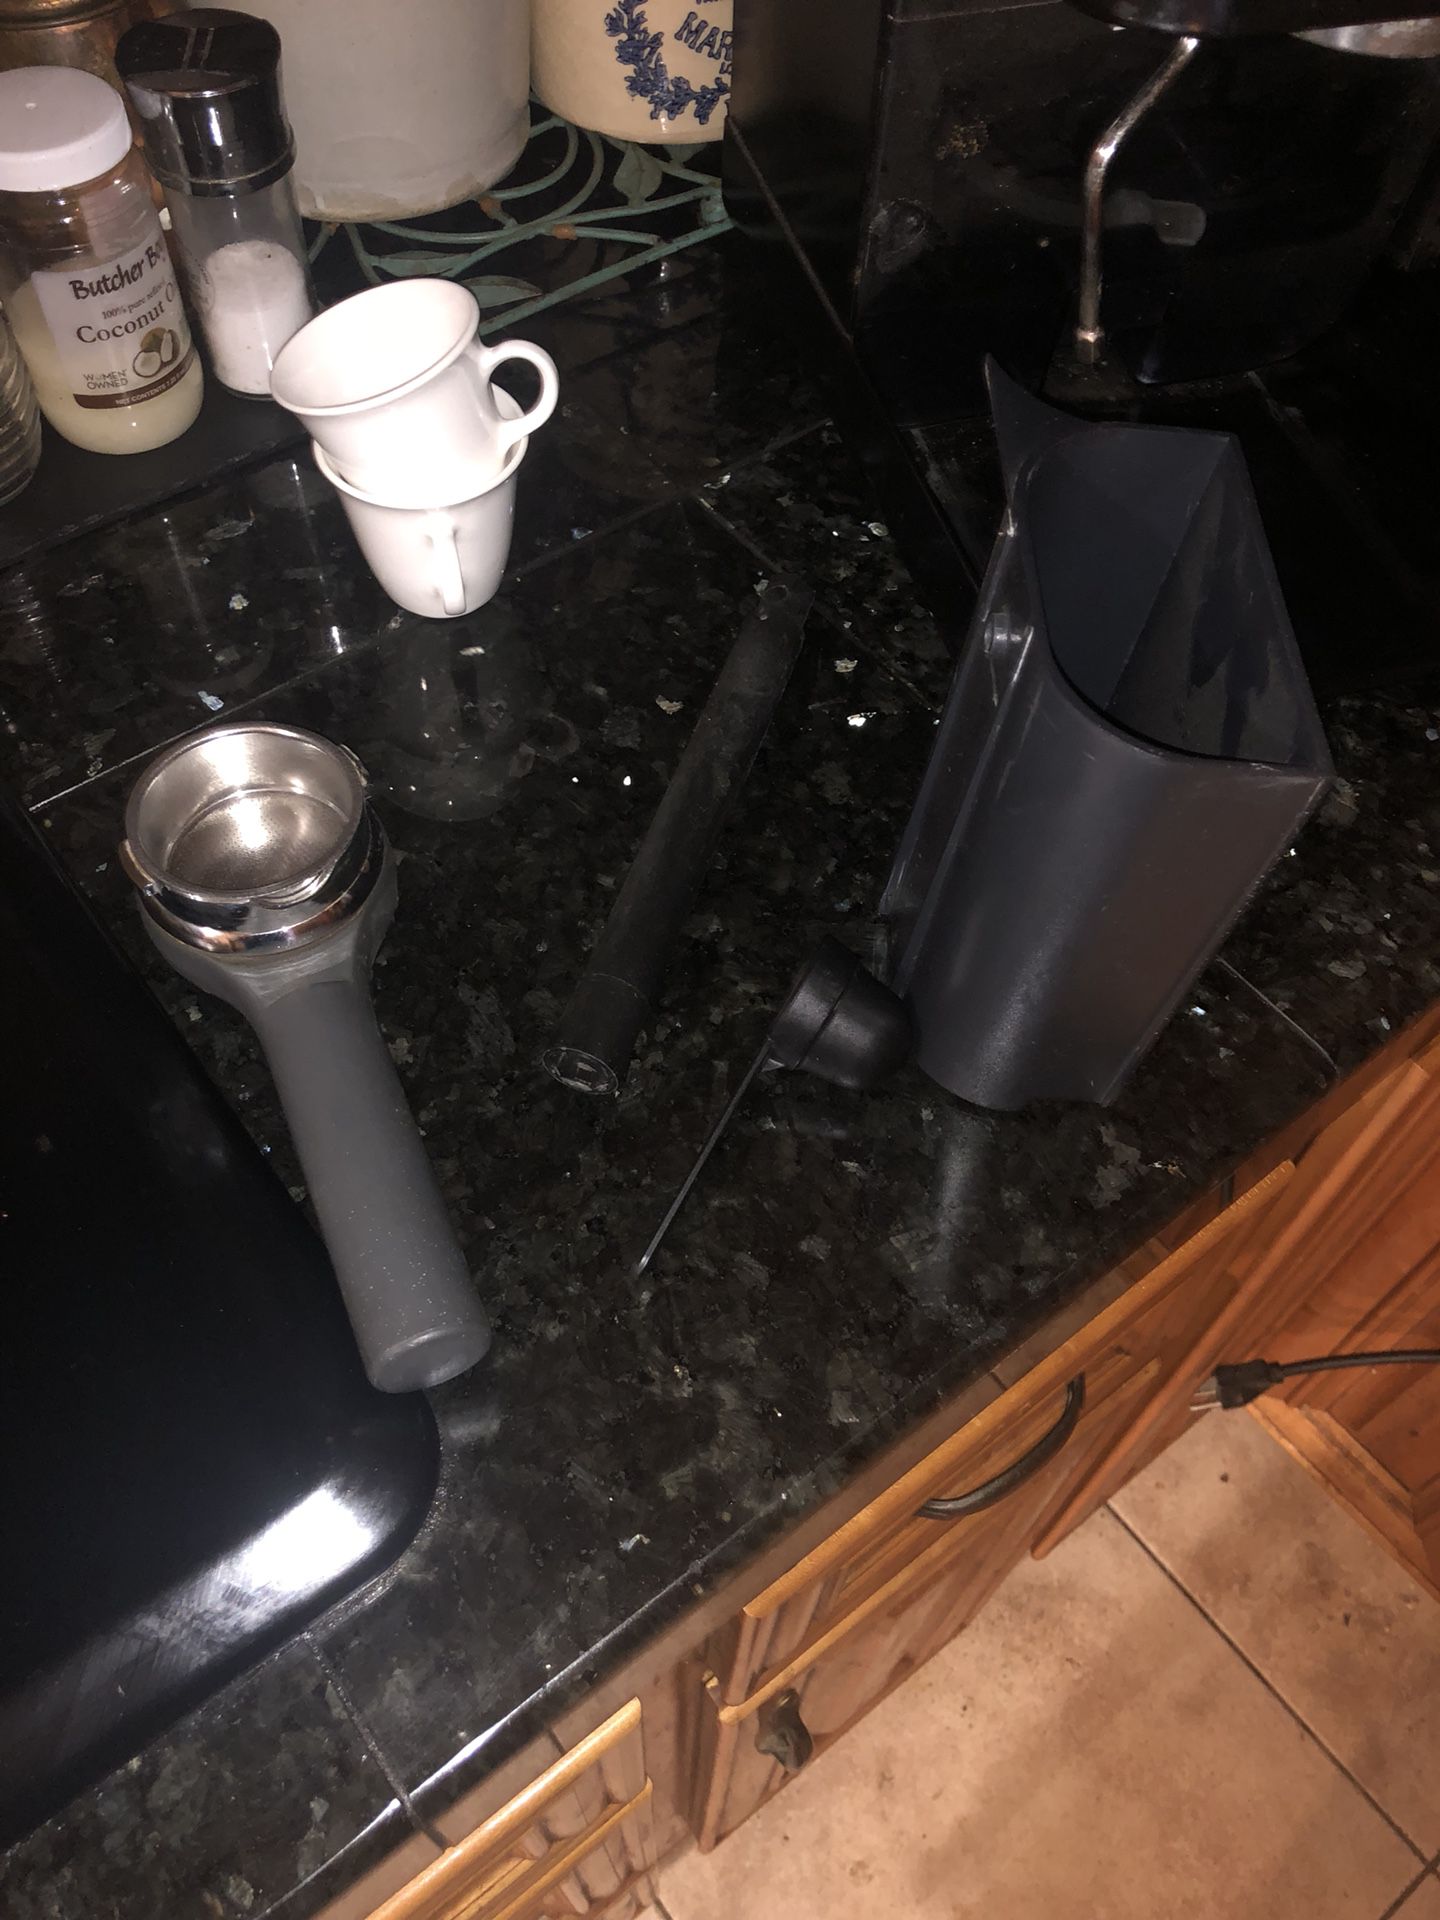 Estro Profi espresso machine burr coffee grinder and milk steamer